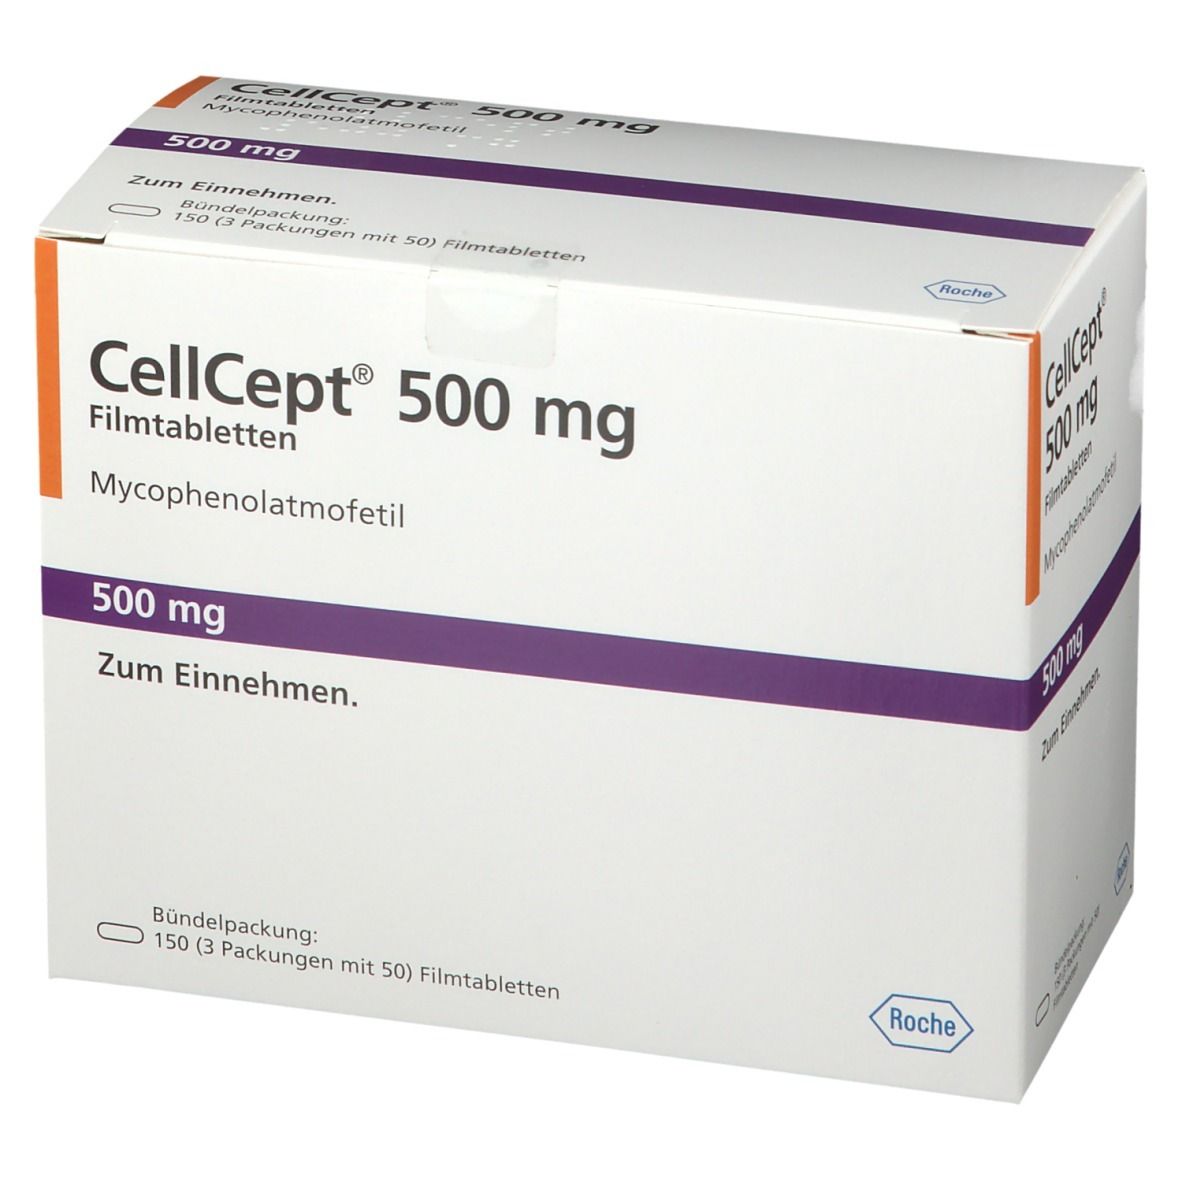 CELLCEPT 500 mg